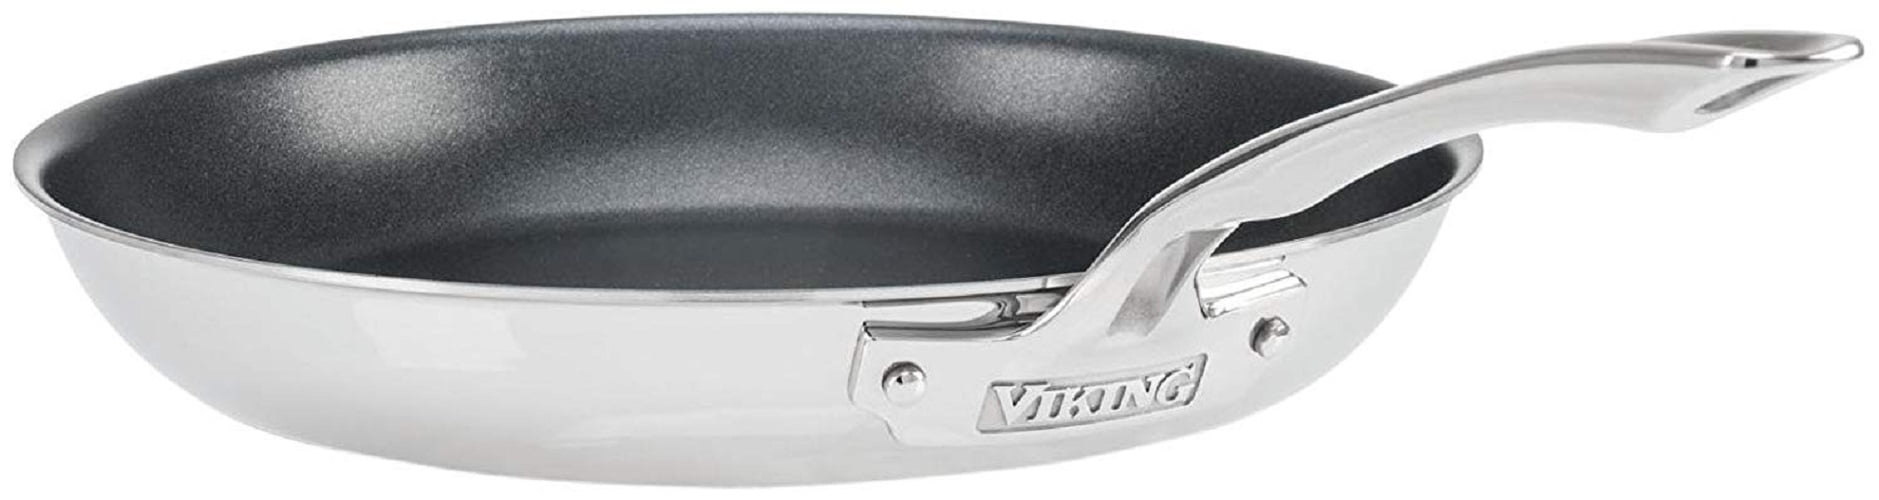 Viking 3-Ply Hybrid Plus 8-Inch Nonstick Fry Pan